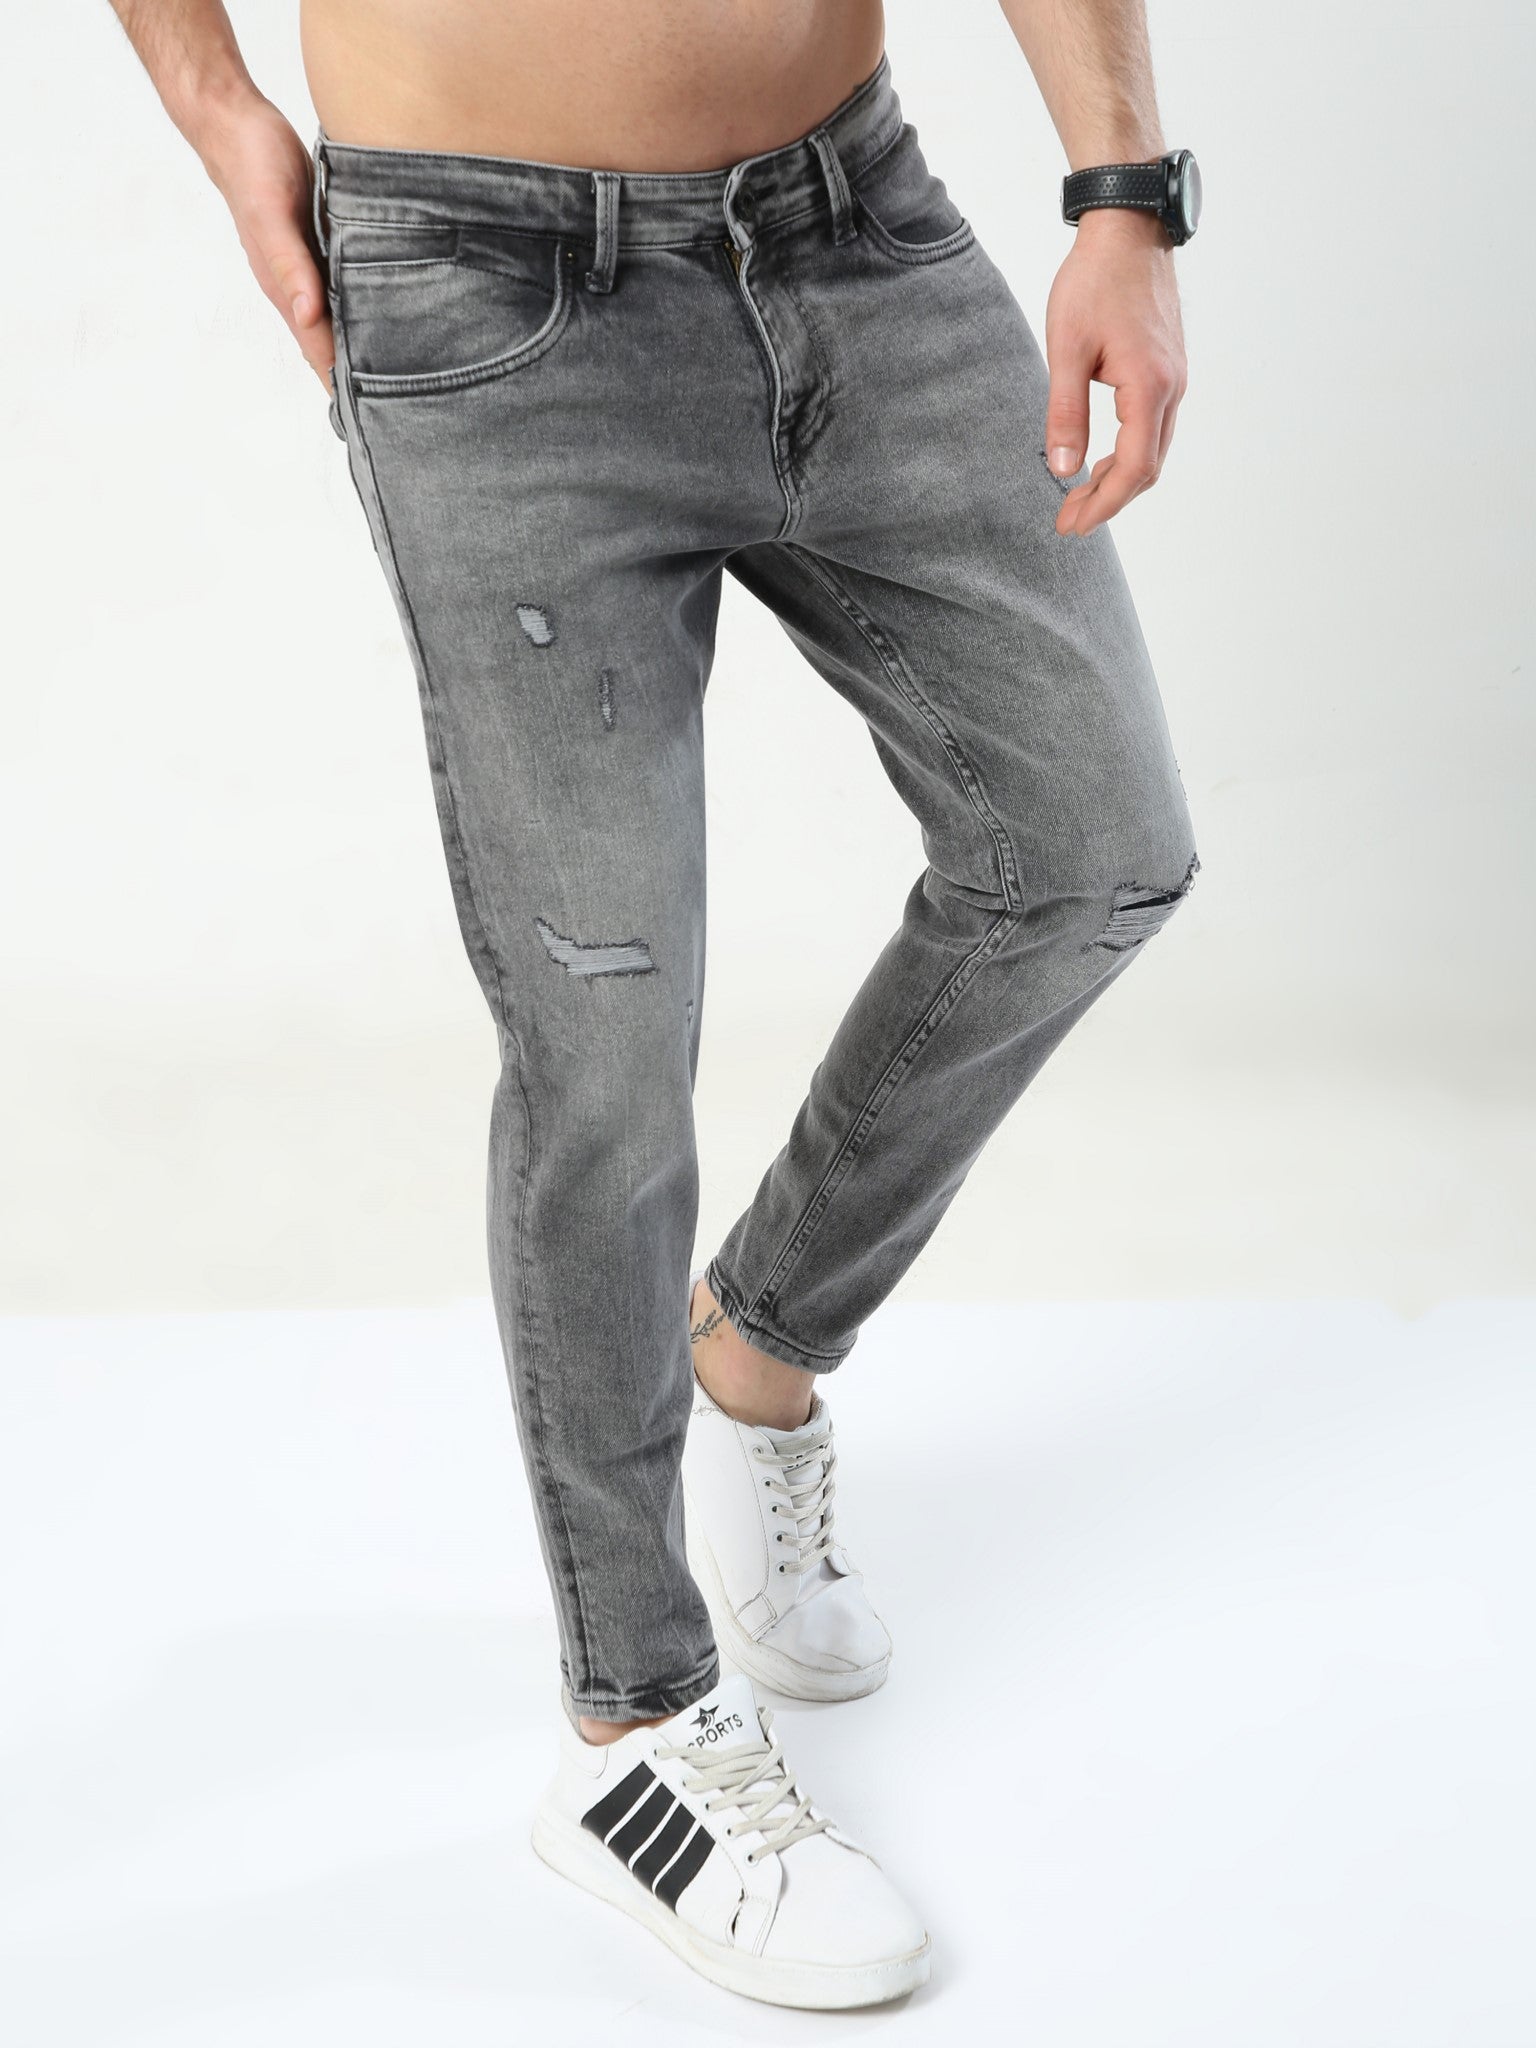 Graphite Grey Skinny Jeans